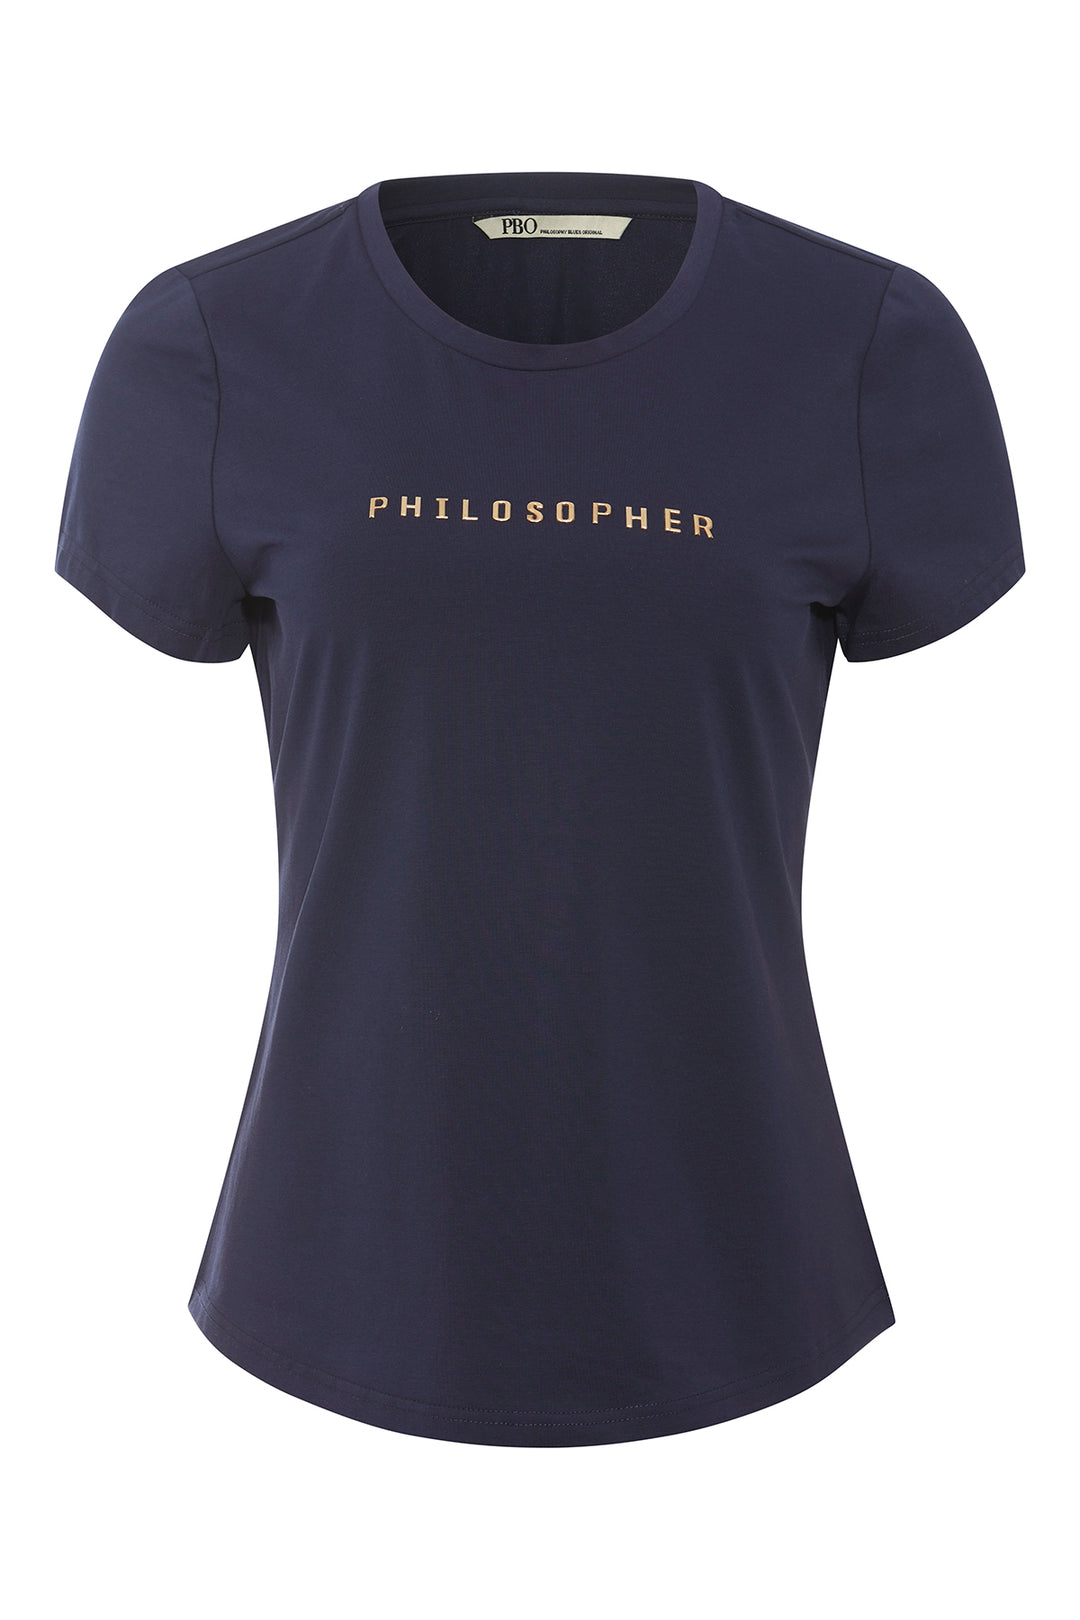 PBO Philosopher T-shirt T-SHIRTS 30 Navy